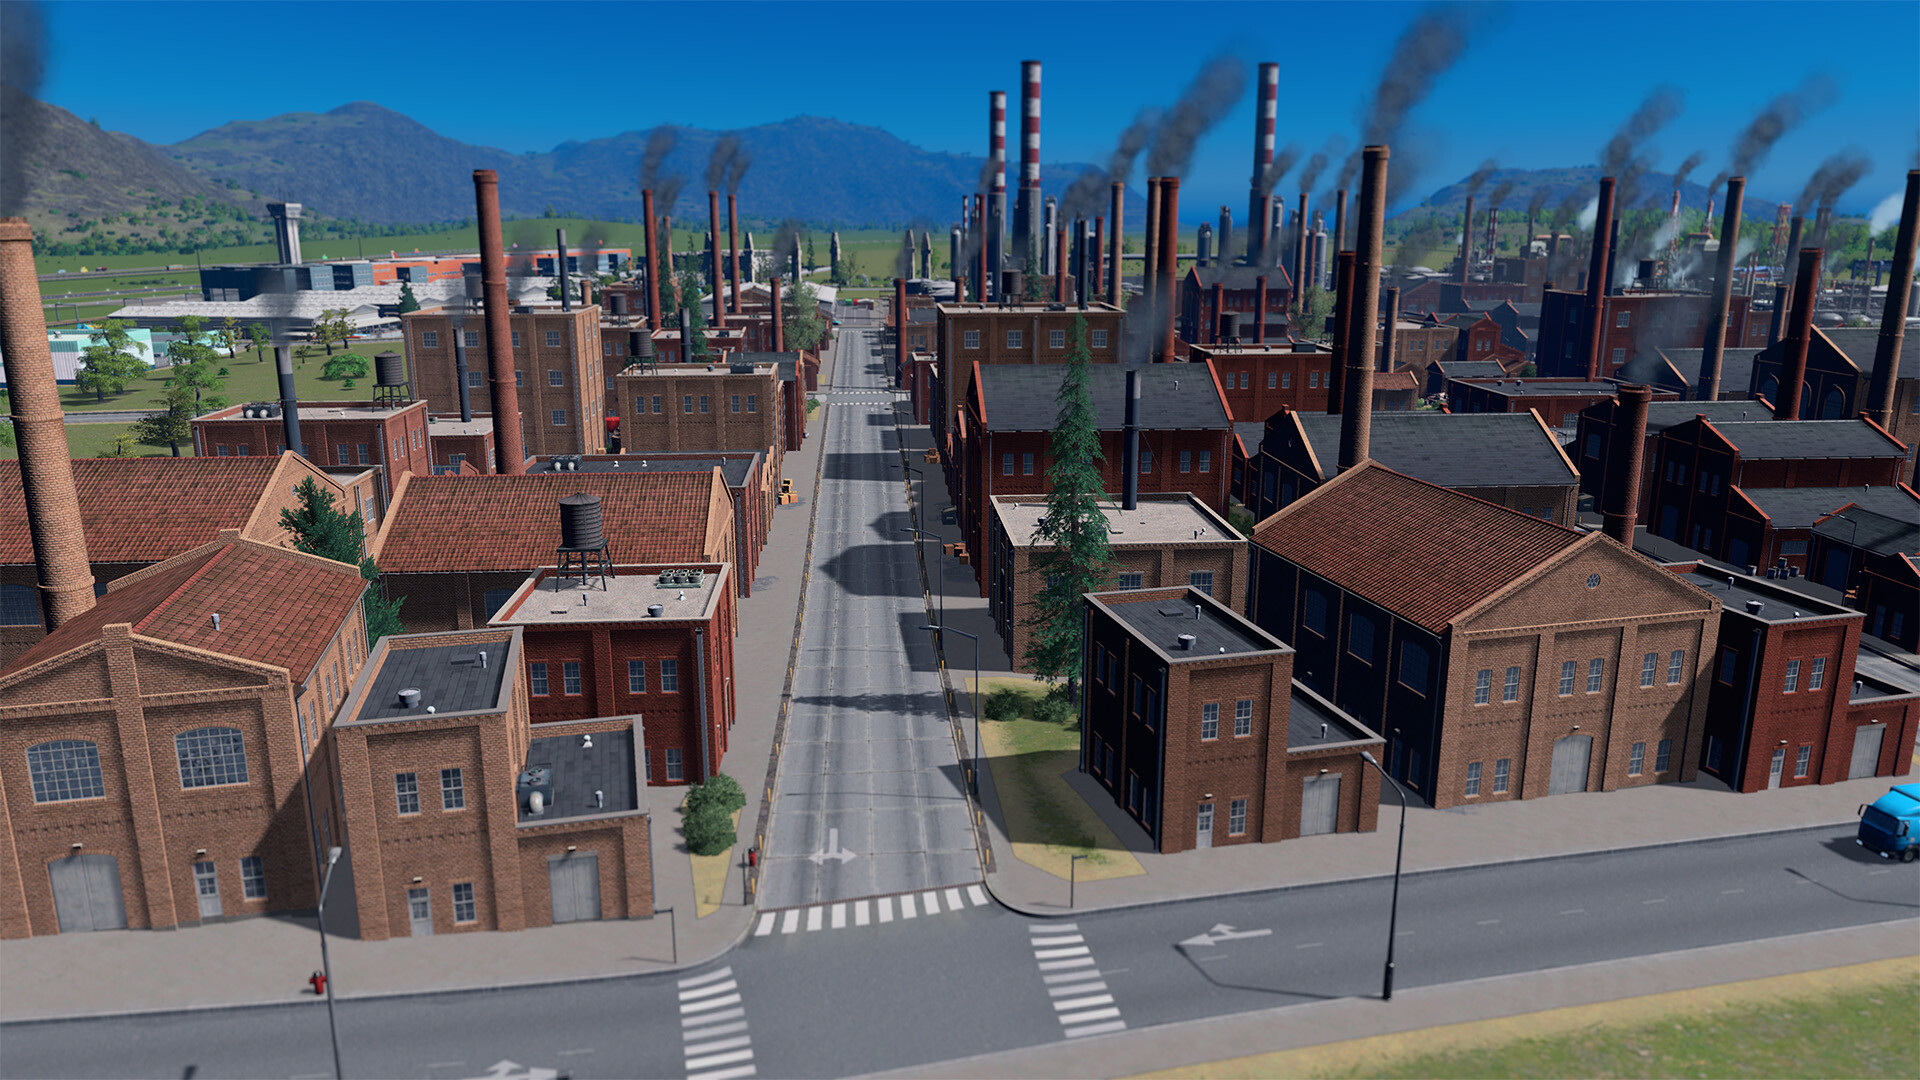 Cities: Skylines - Content Creator Pack: Industrial Evolution DLC Steam CD Key